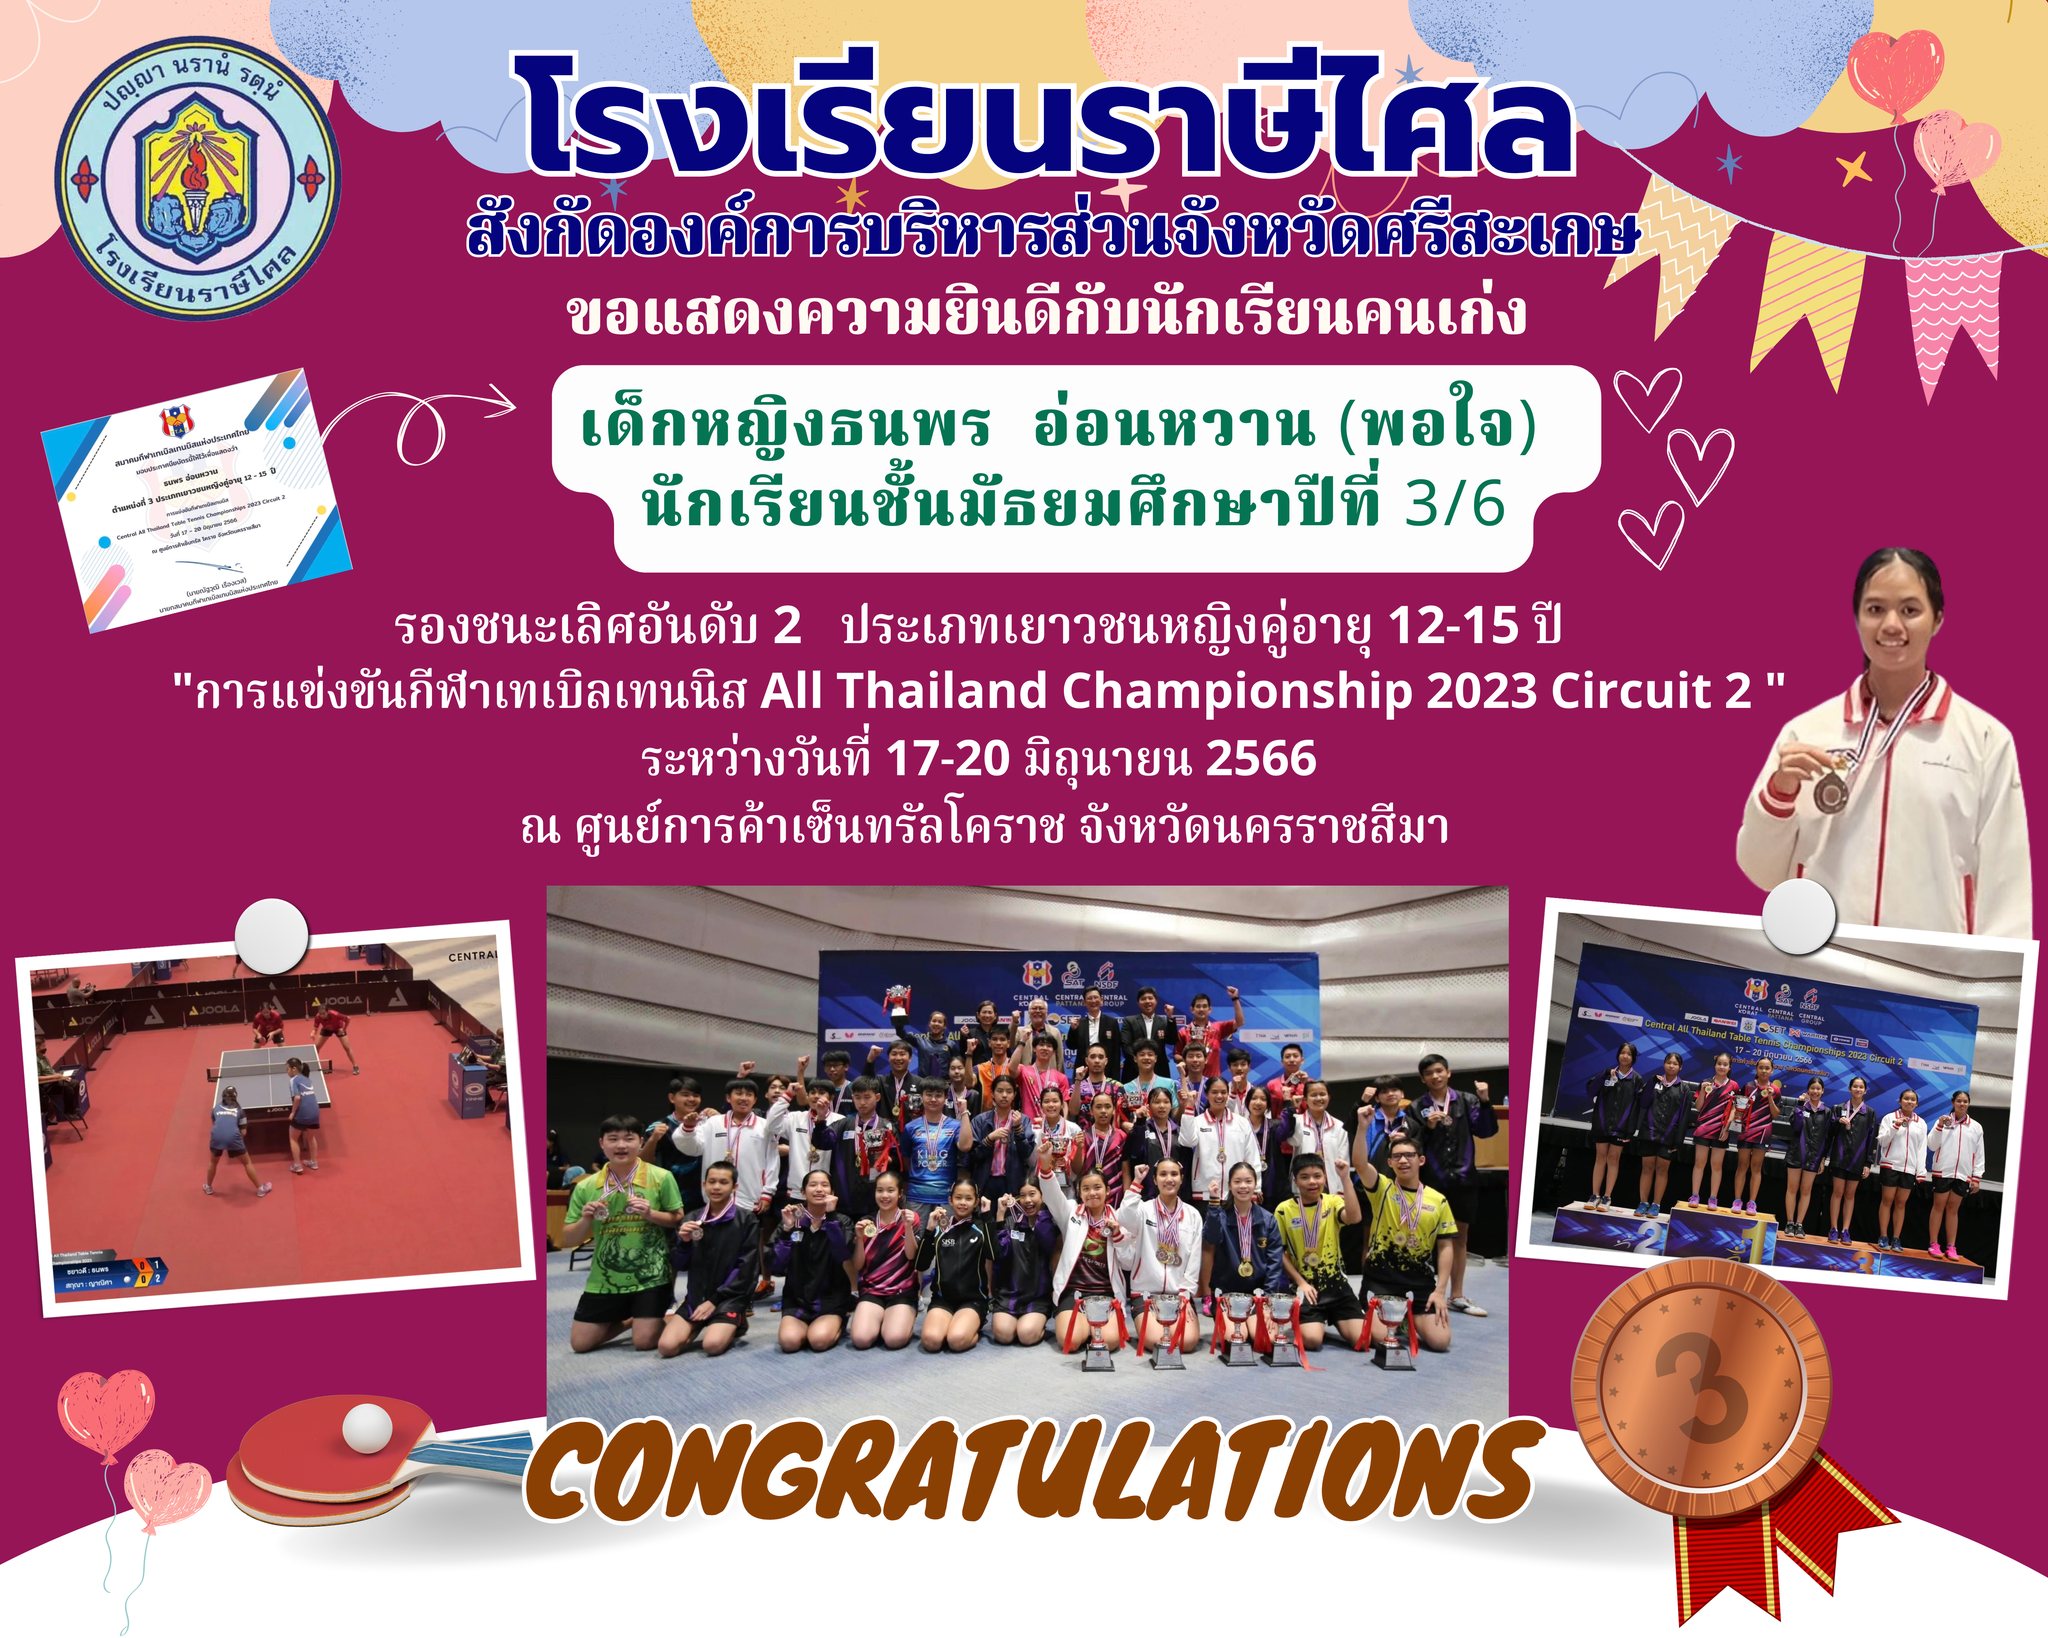 All Thailand Championship 2023 Circuit 2